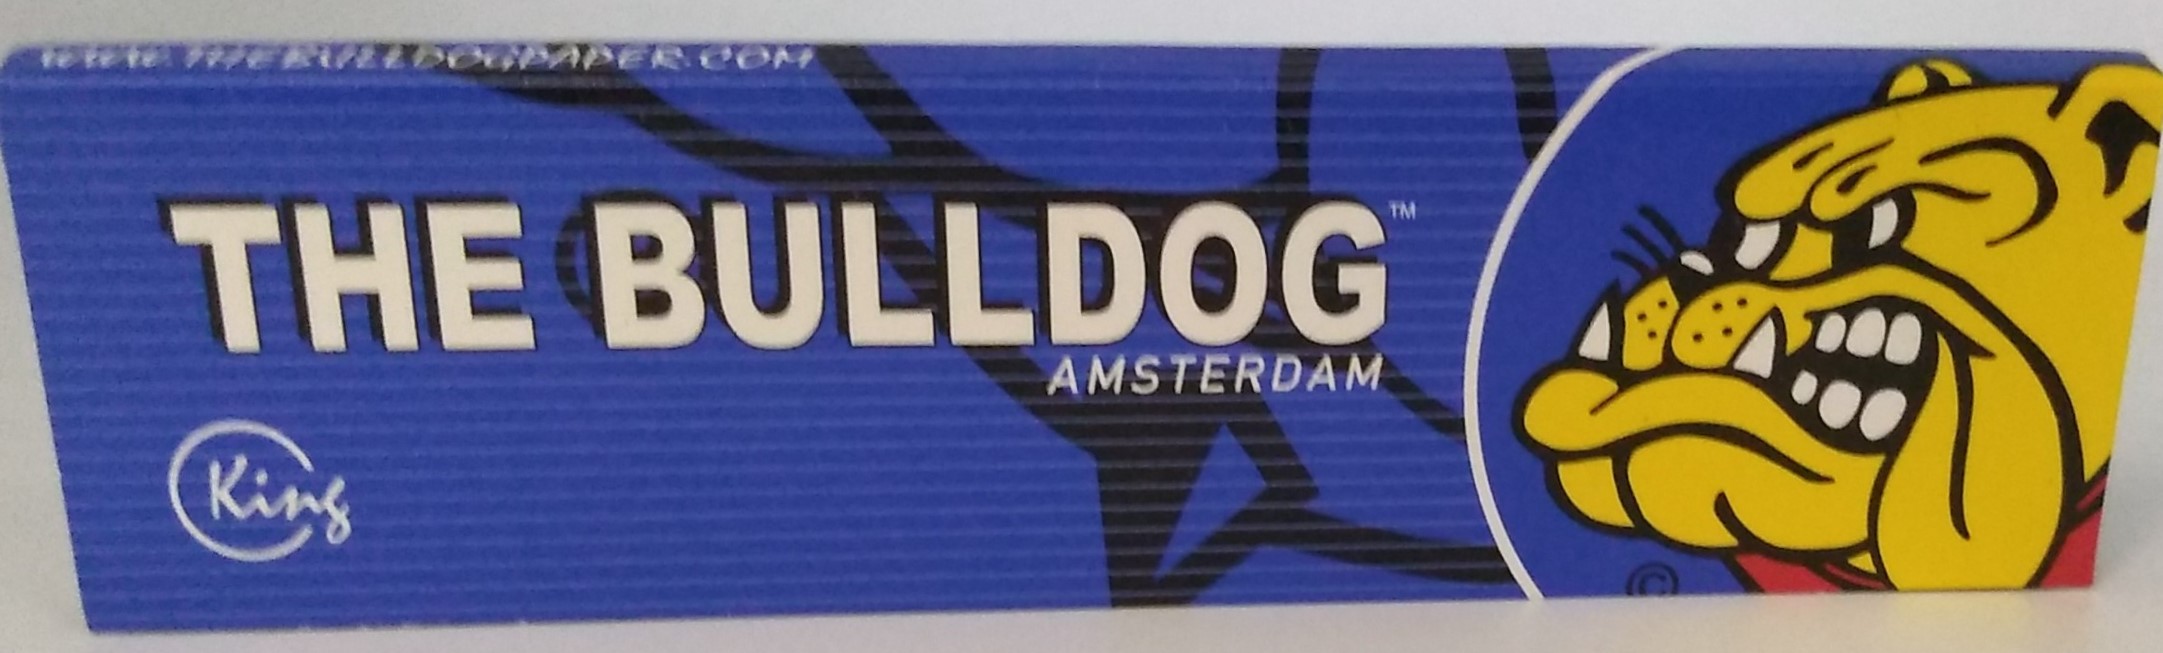 Papel The Bulldog Blue King Size